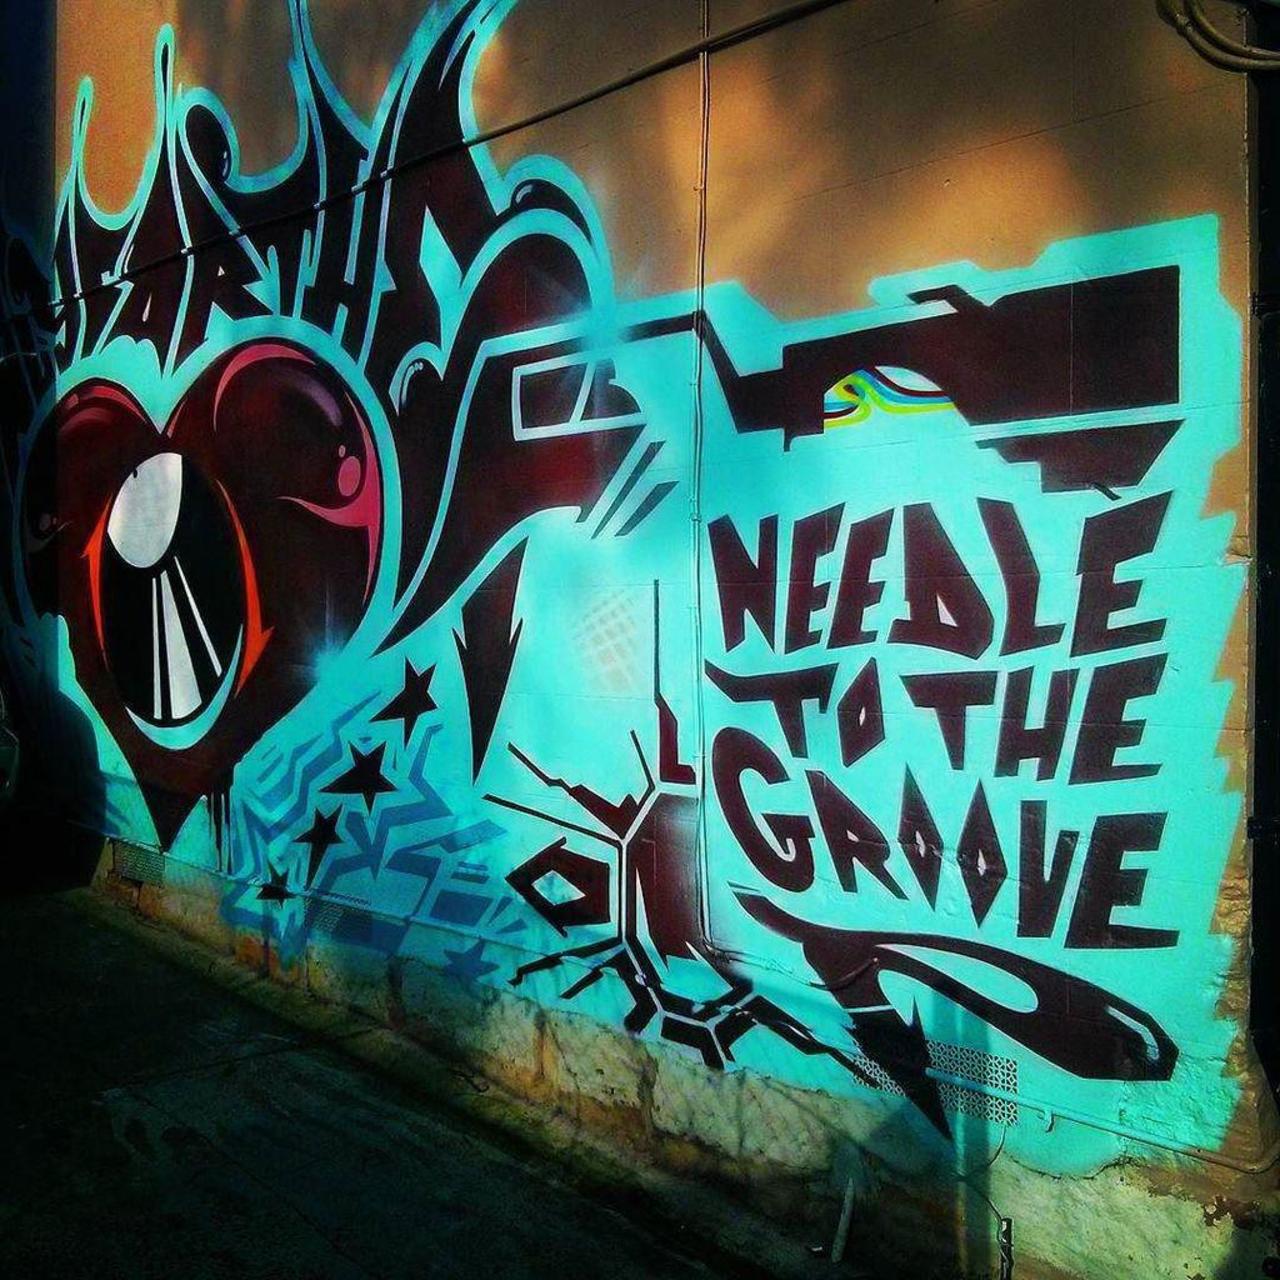 Needle to the Groove #ifttt #newtown #sydney #sydneygraffiti #needle #rsa_graffiti #arteurbano #streetart #graffiti… http://t.co/x50xW1ILWq